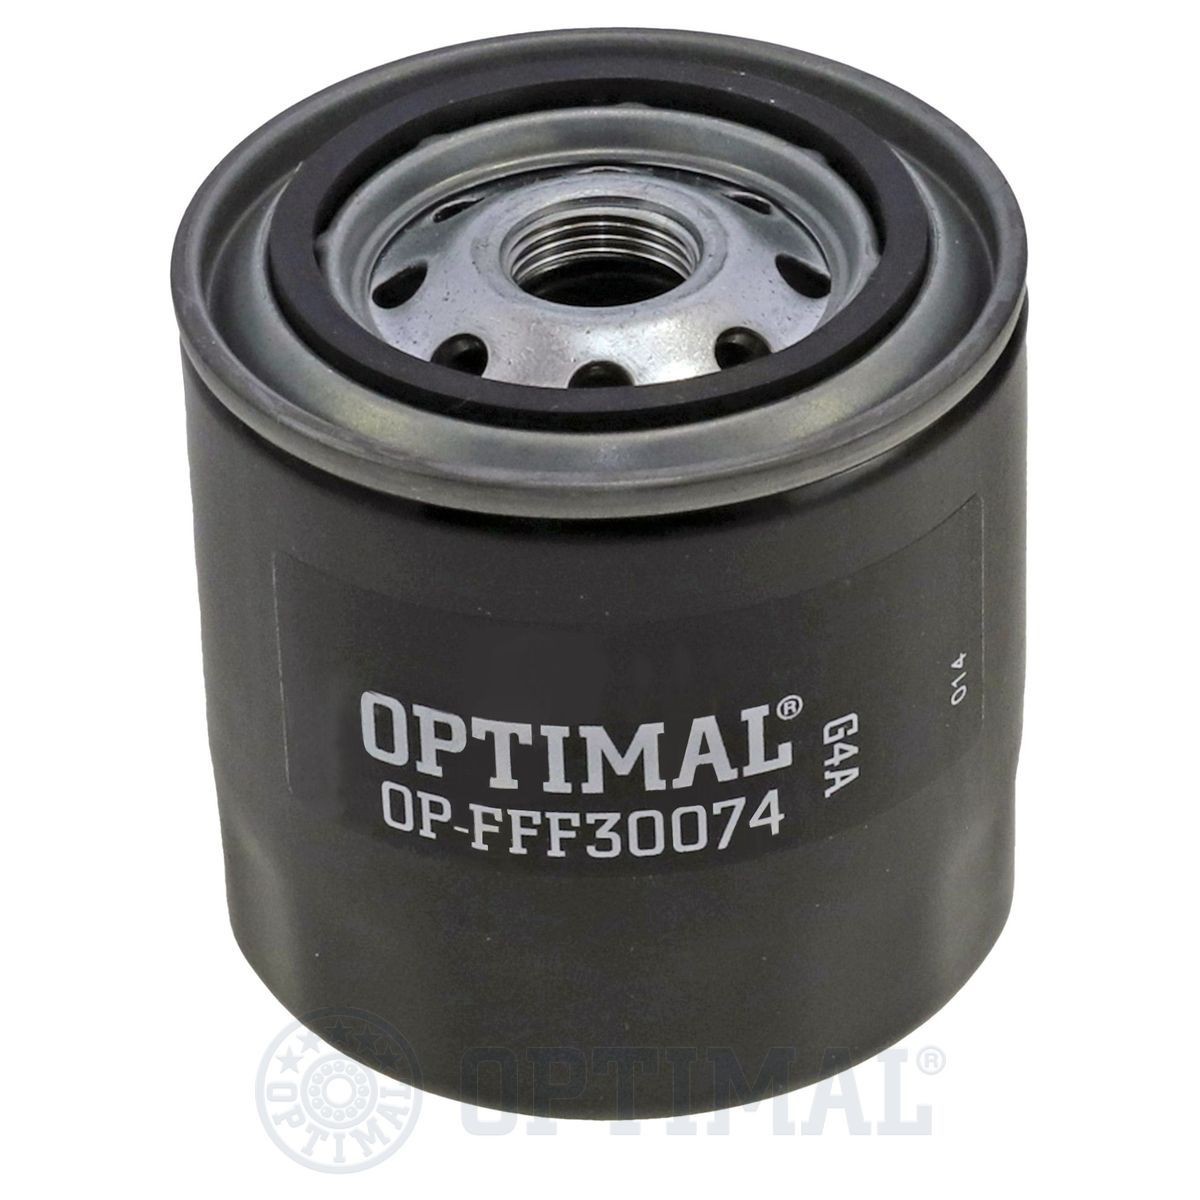 OPTIMAL OP-FFF30074 Fuel filter 1640009W00